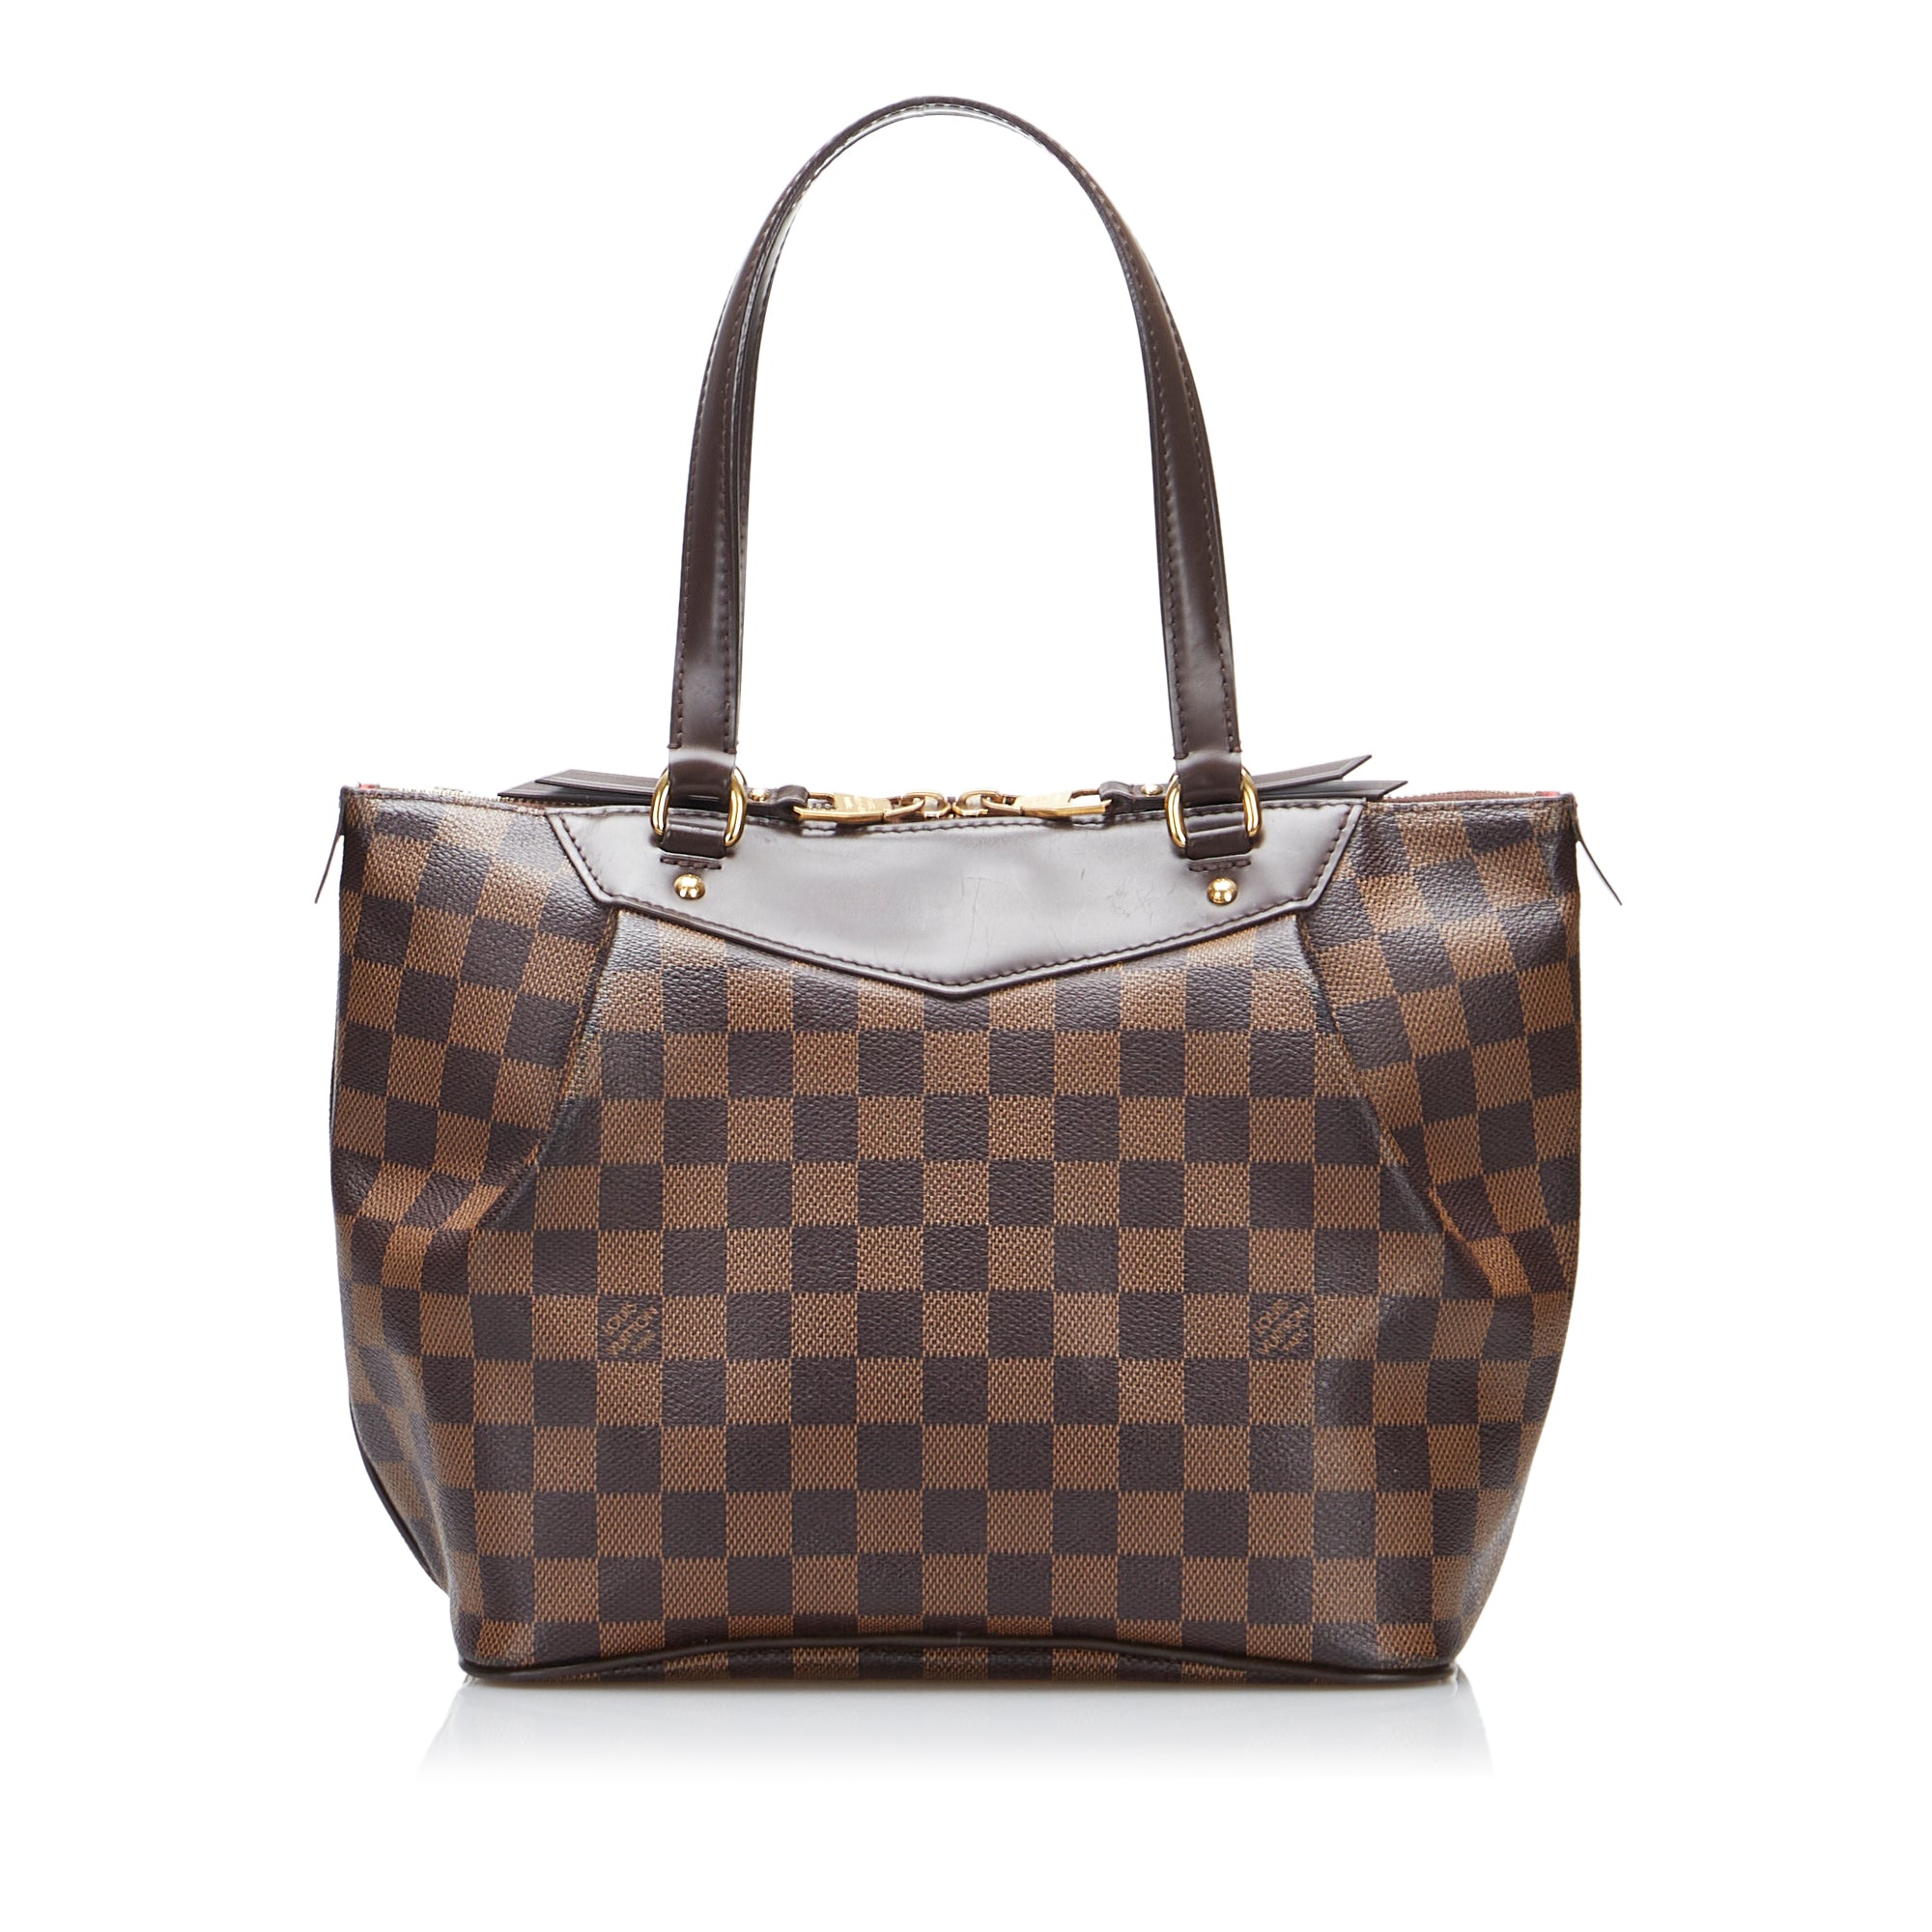 Louis Vuitton - Authenticated Clutch Bag - Leather Brown Plain for Women, Good Condition